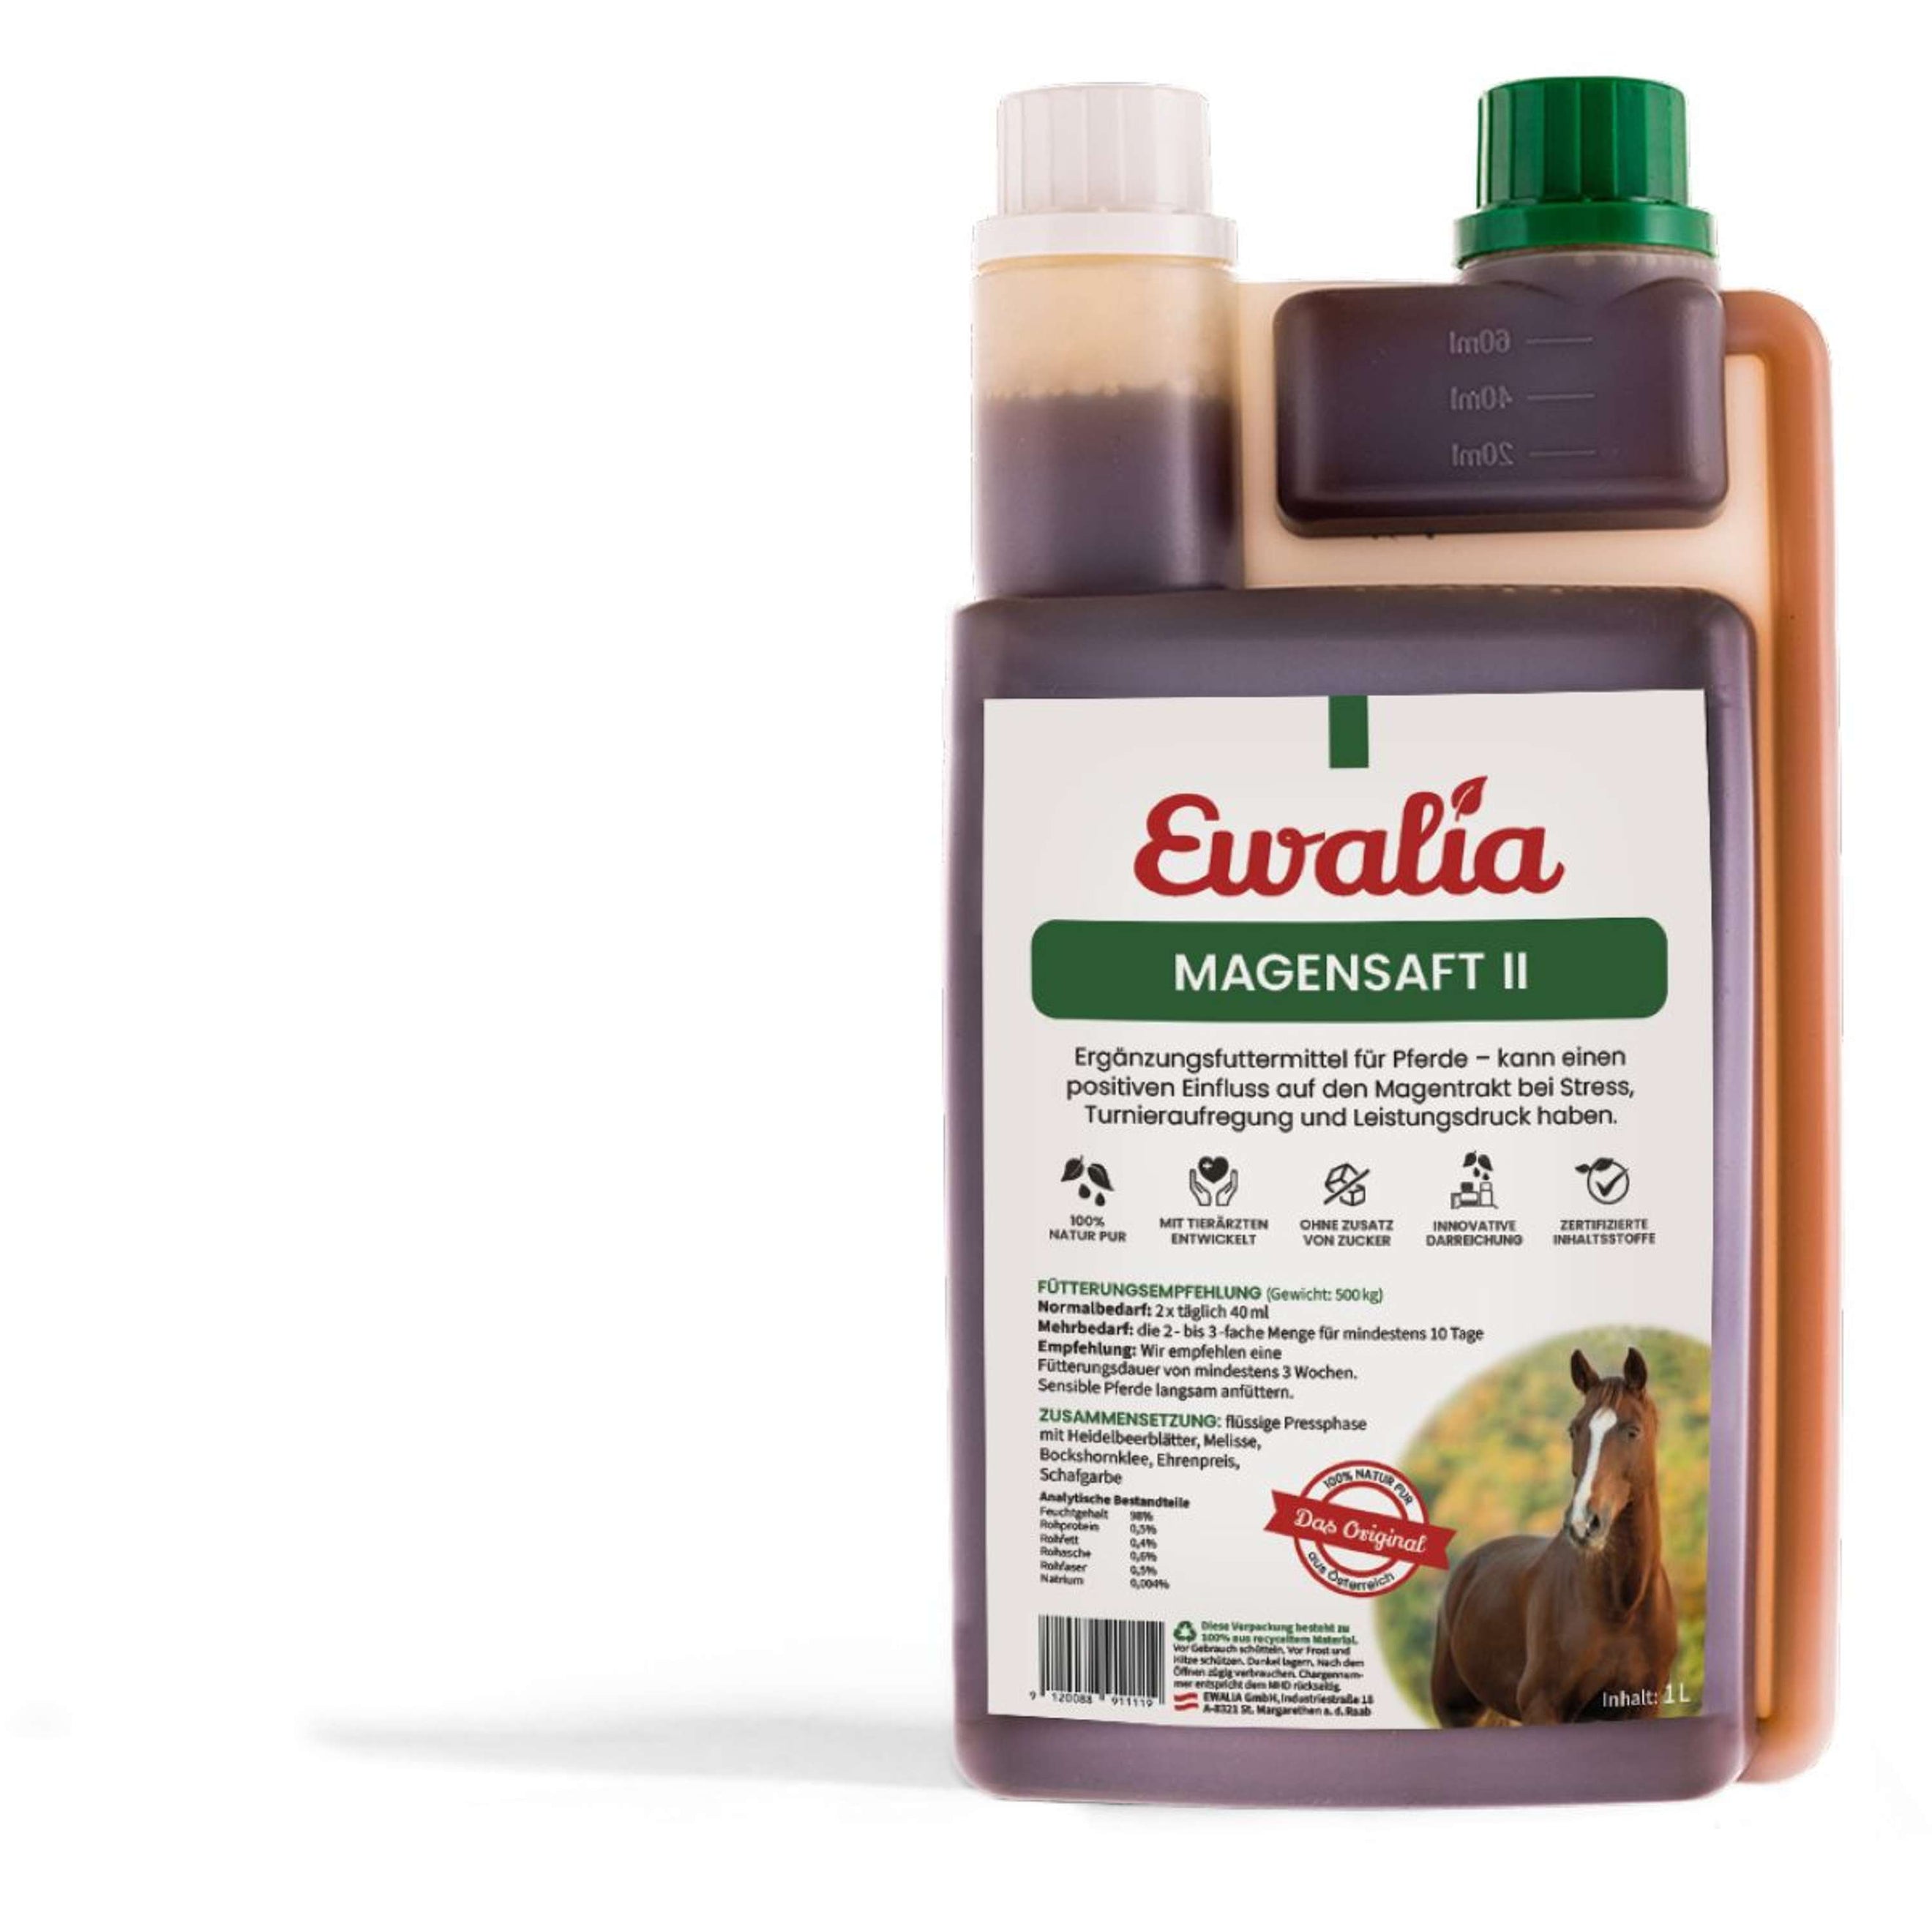 Ewalia Gastro Care Liquid II